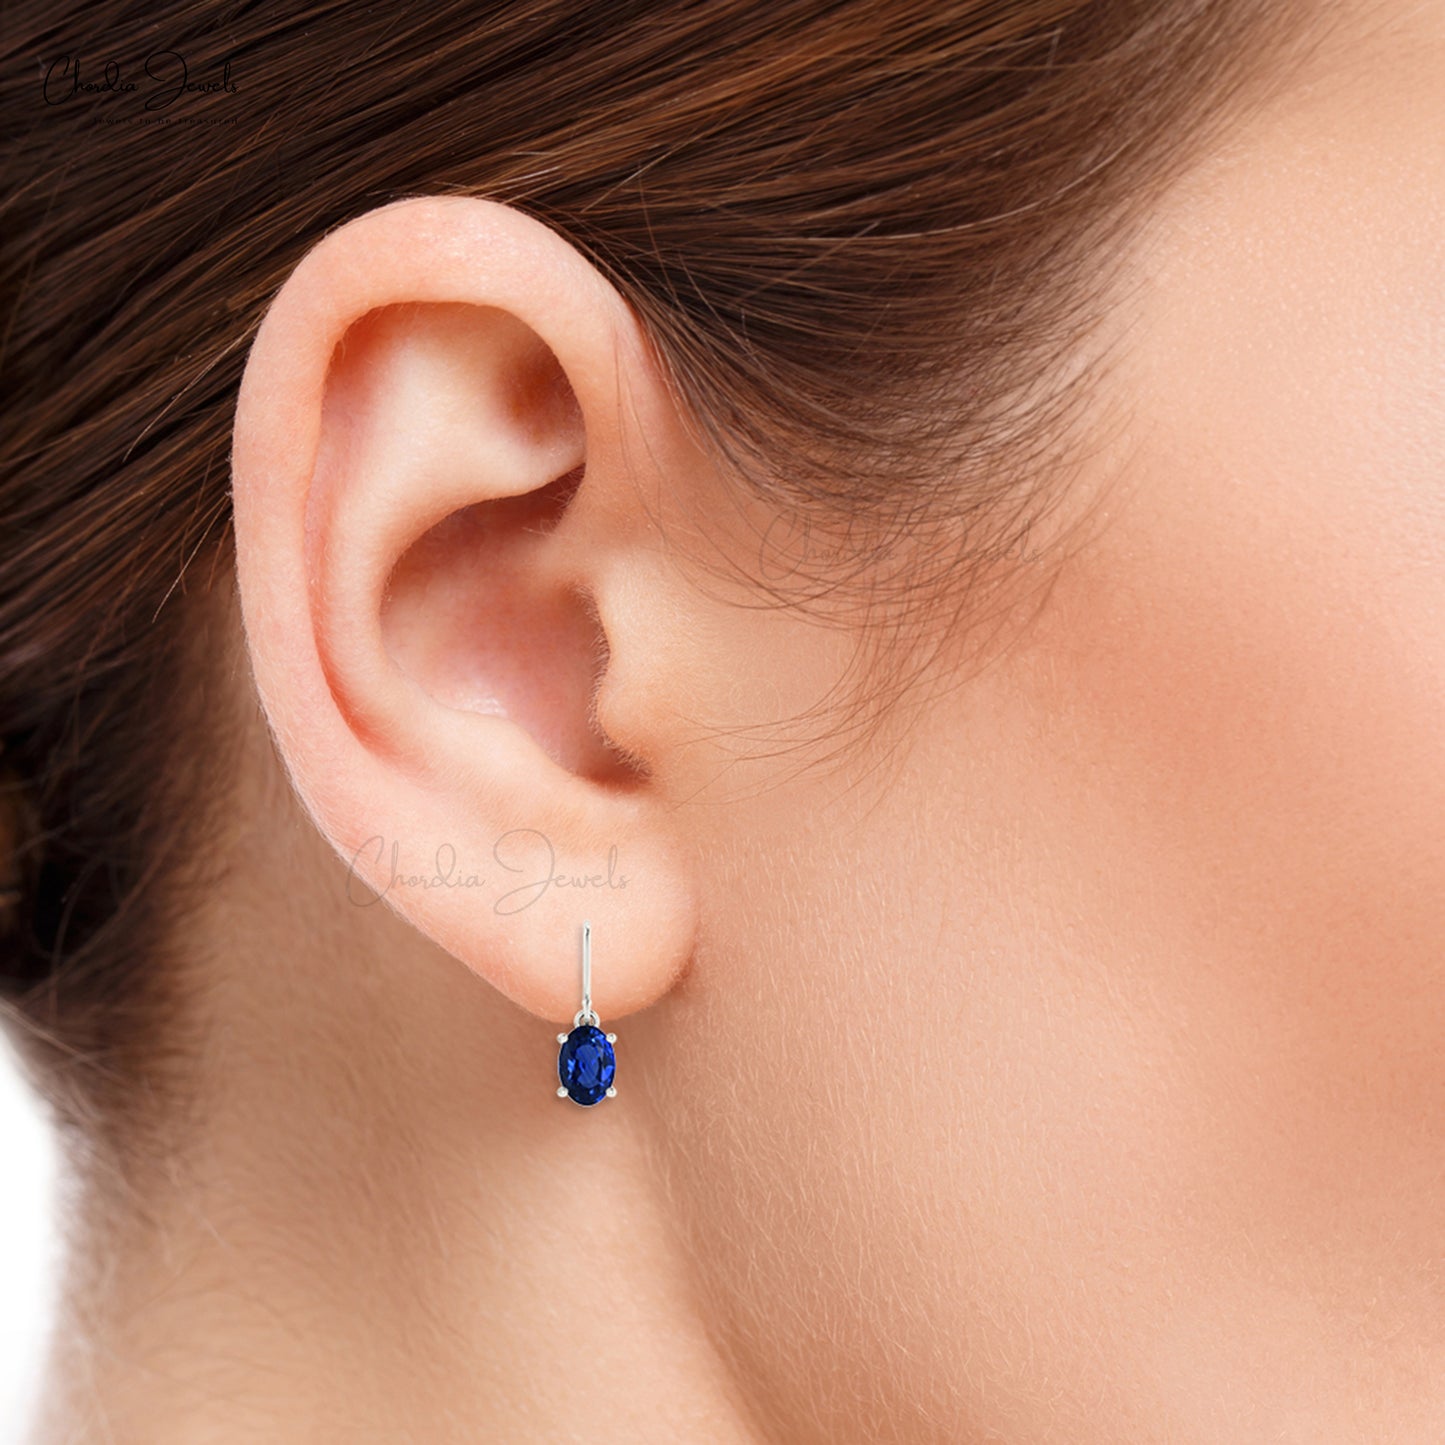 Iconic Blue Sapphire Prong Set Earrings 1.44Ct Oval Cut Genuine Gemstone Dangler Earrings 14k Real Gold Art Deco Jewelry For Wedding Gift